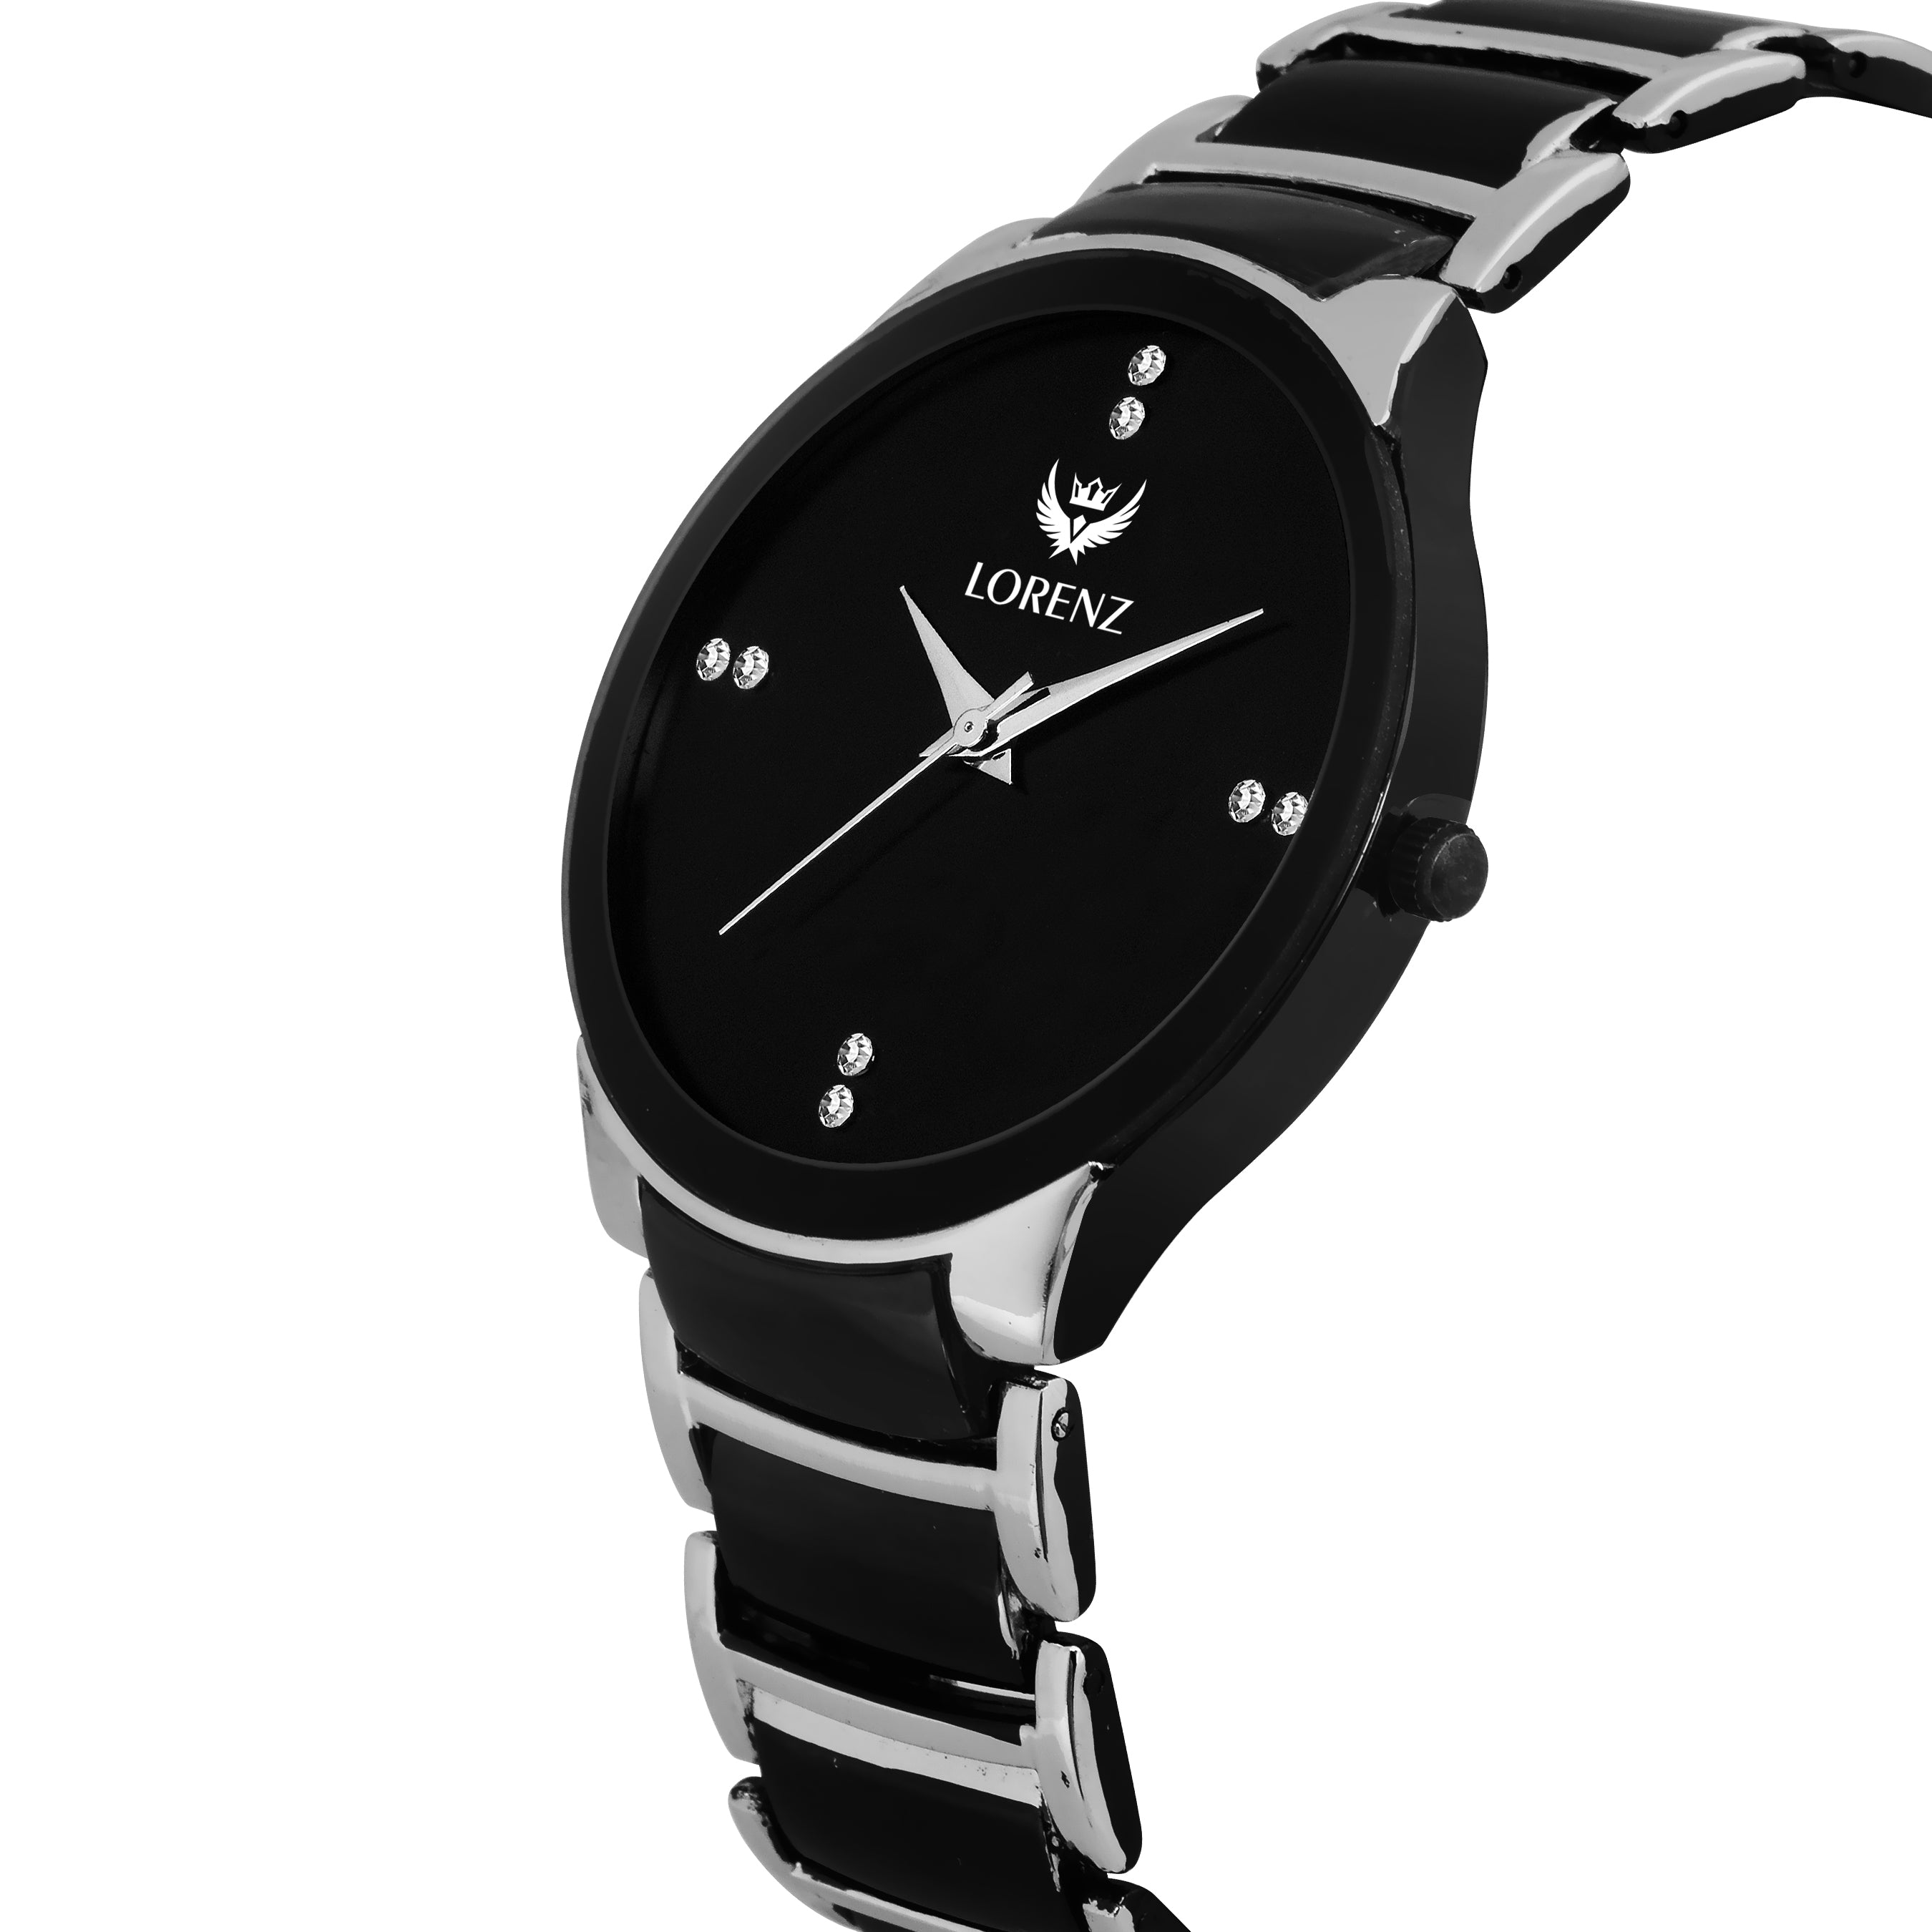 Lorenz MK-1063A Genuine Collection Watch with Black Jewelled Dial - Lorenz Fashion